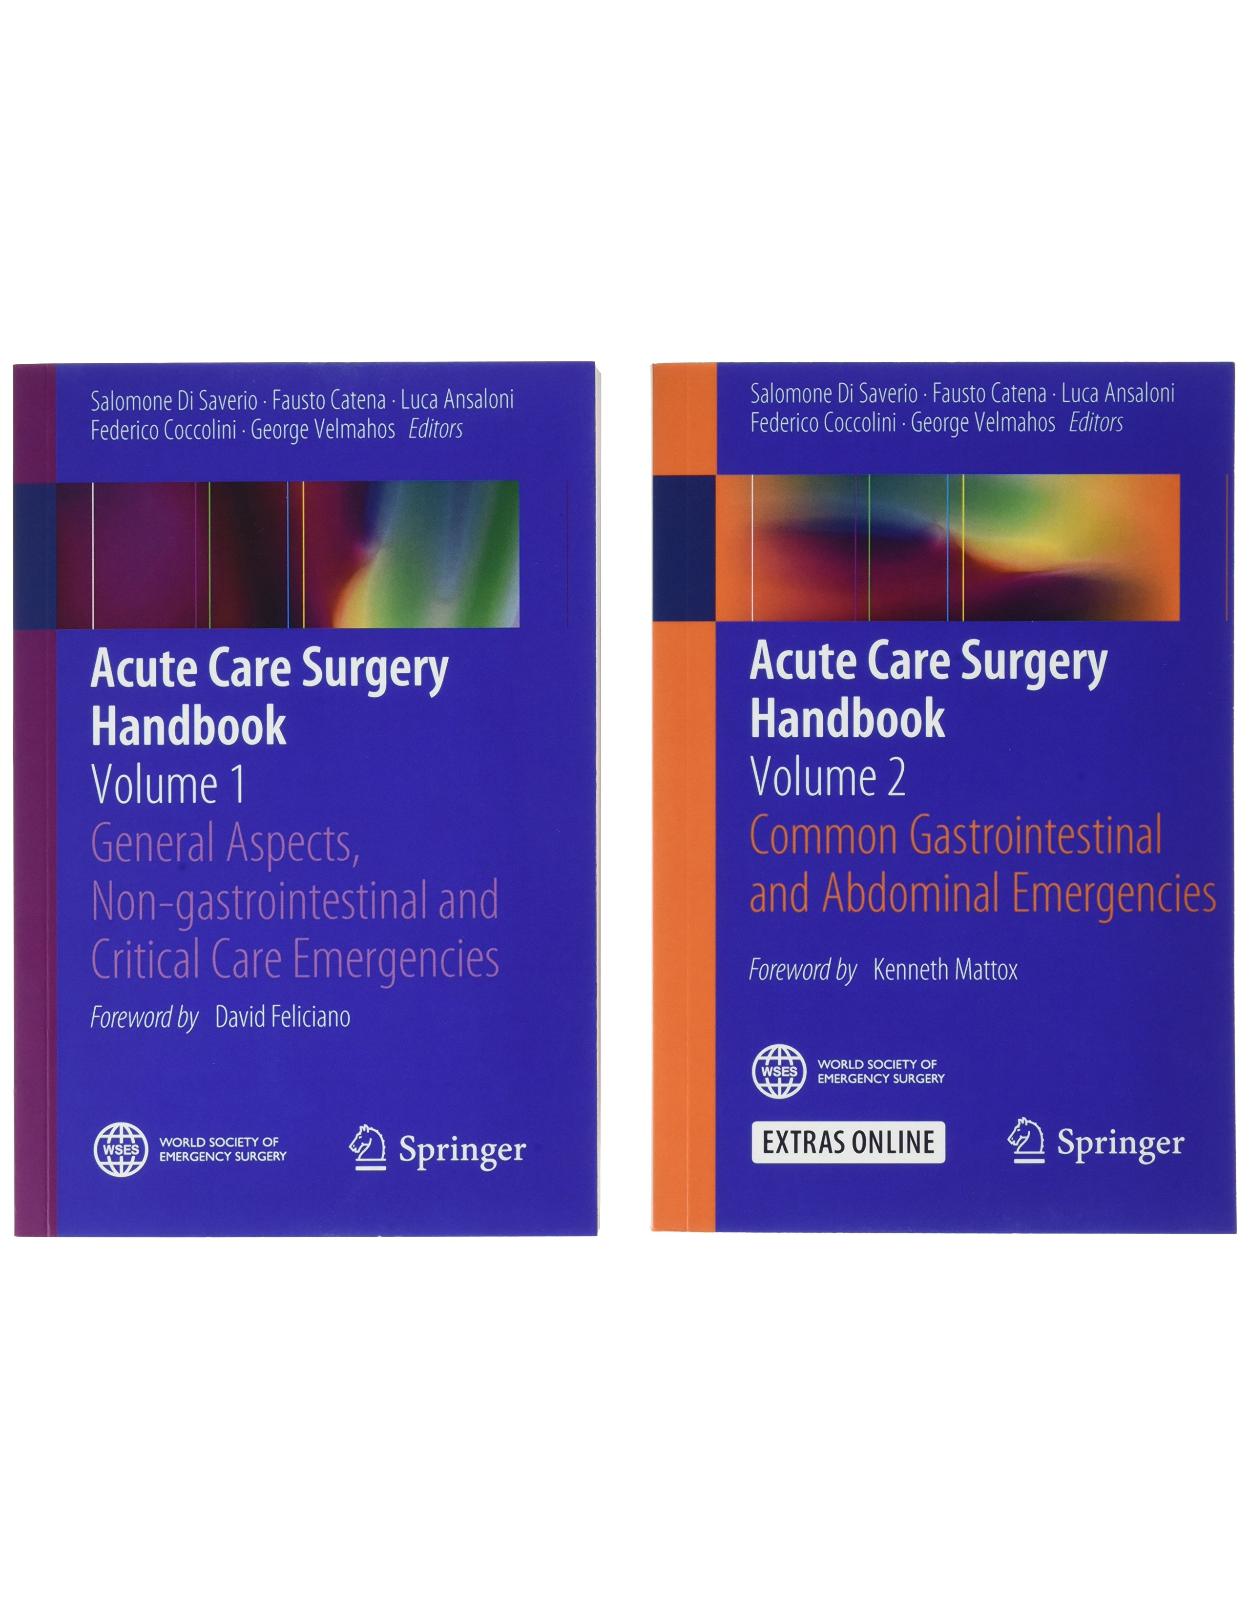 Acute Care Surgery Handbook: Two-volume set